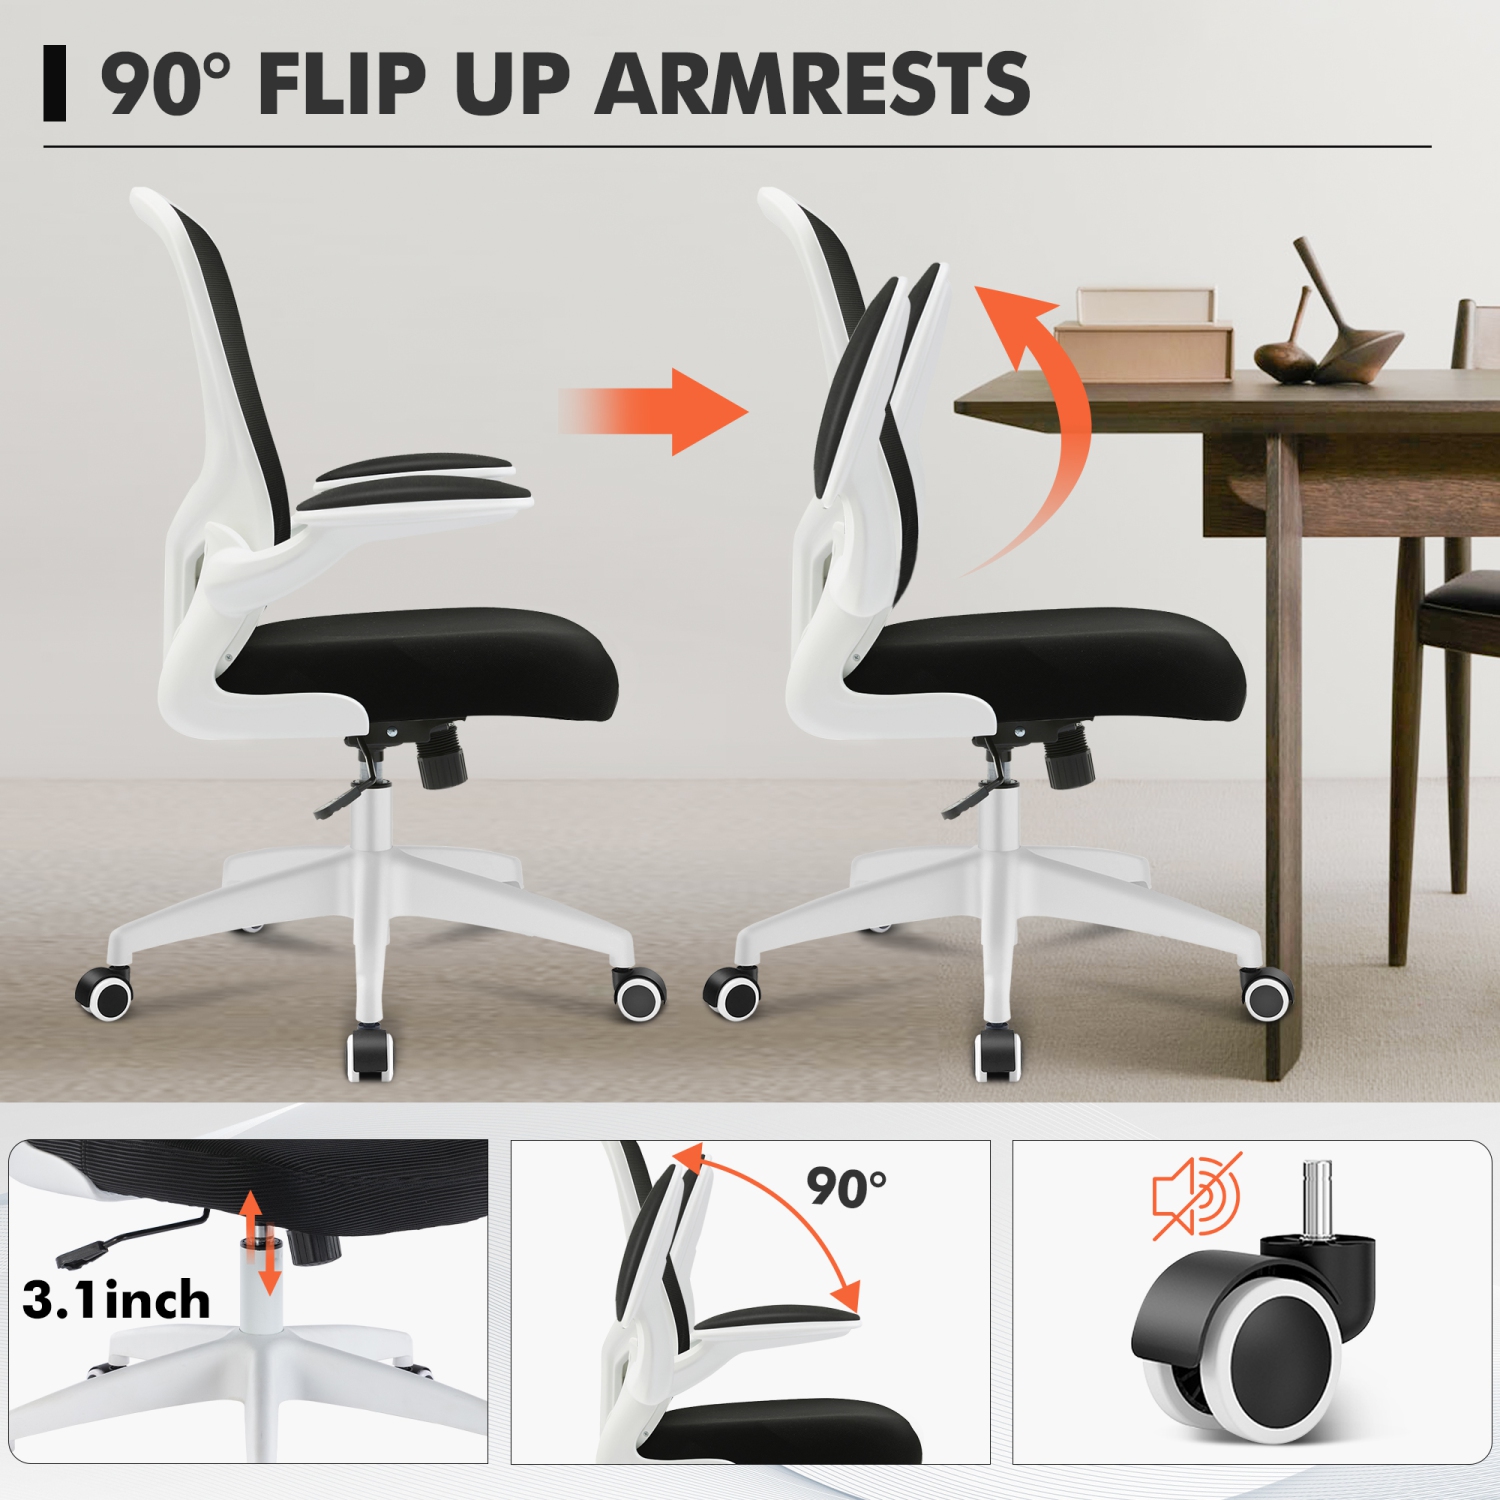 CoolHut Office Chair - Ergonomic Desk Chair with Adjustable